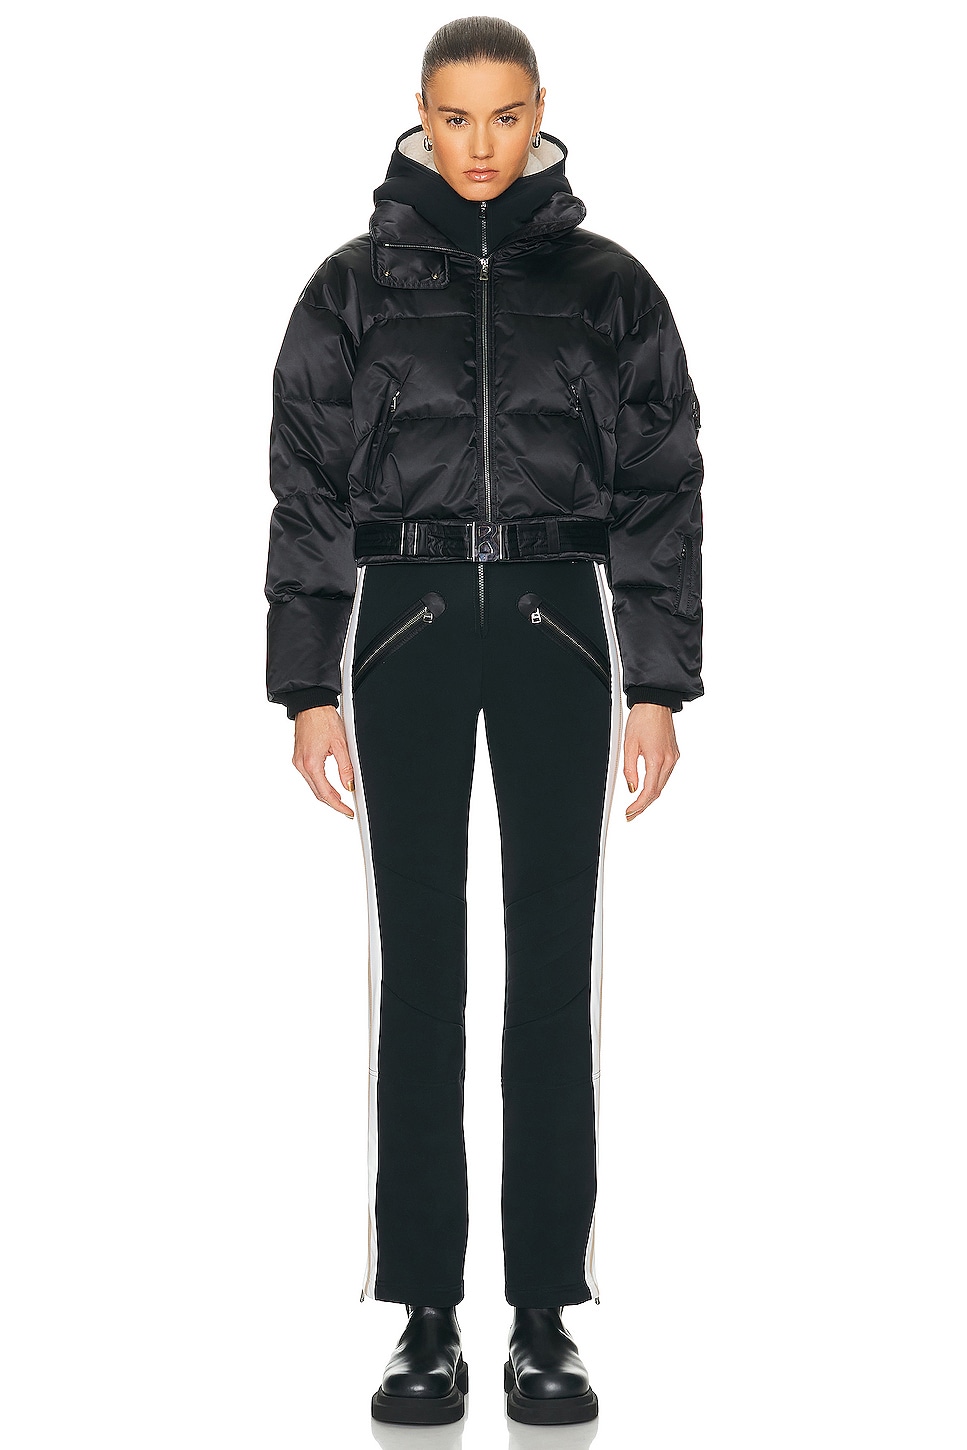 Image 1 of BOGNER Amalia-lD Ski Suit in Black